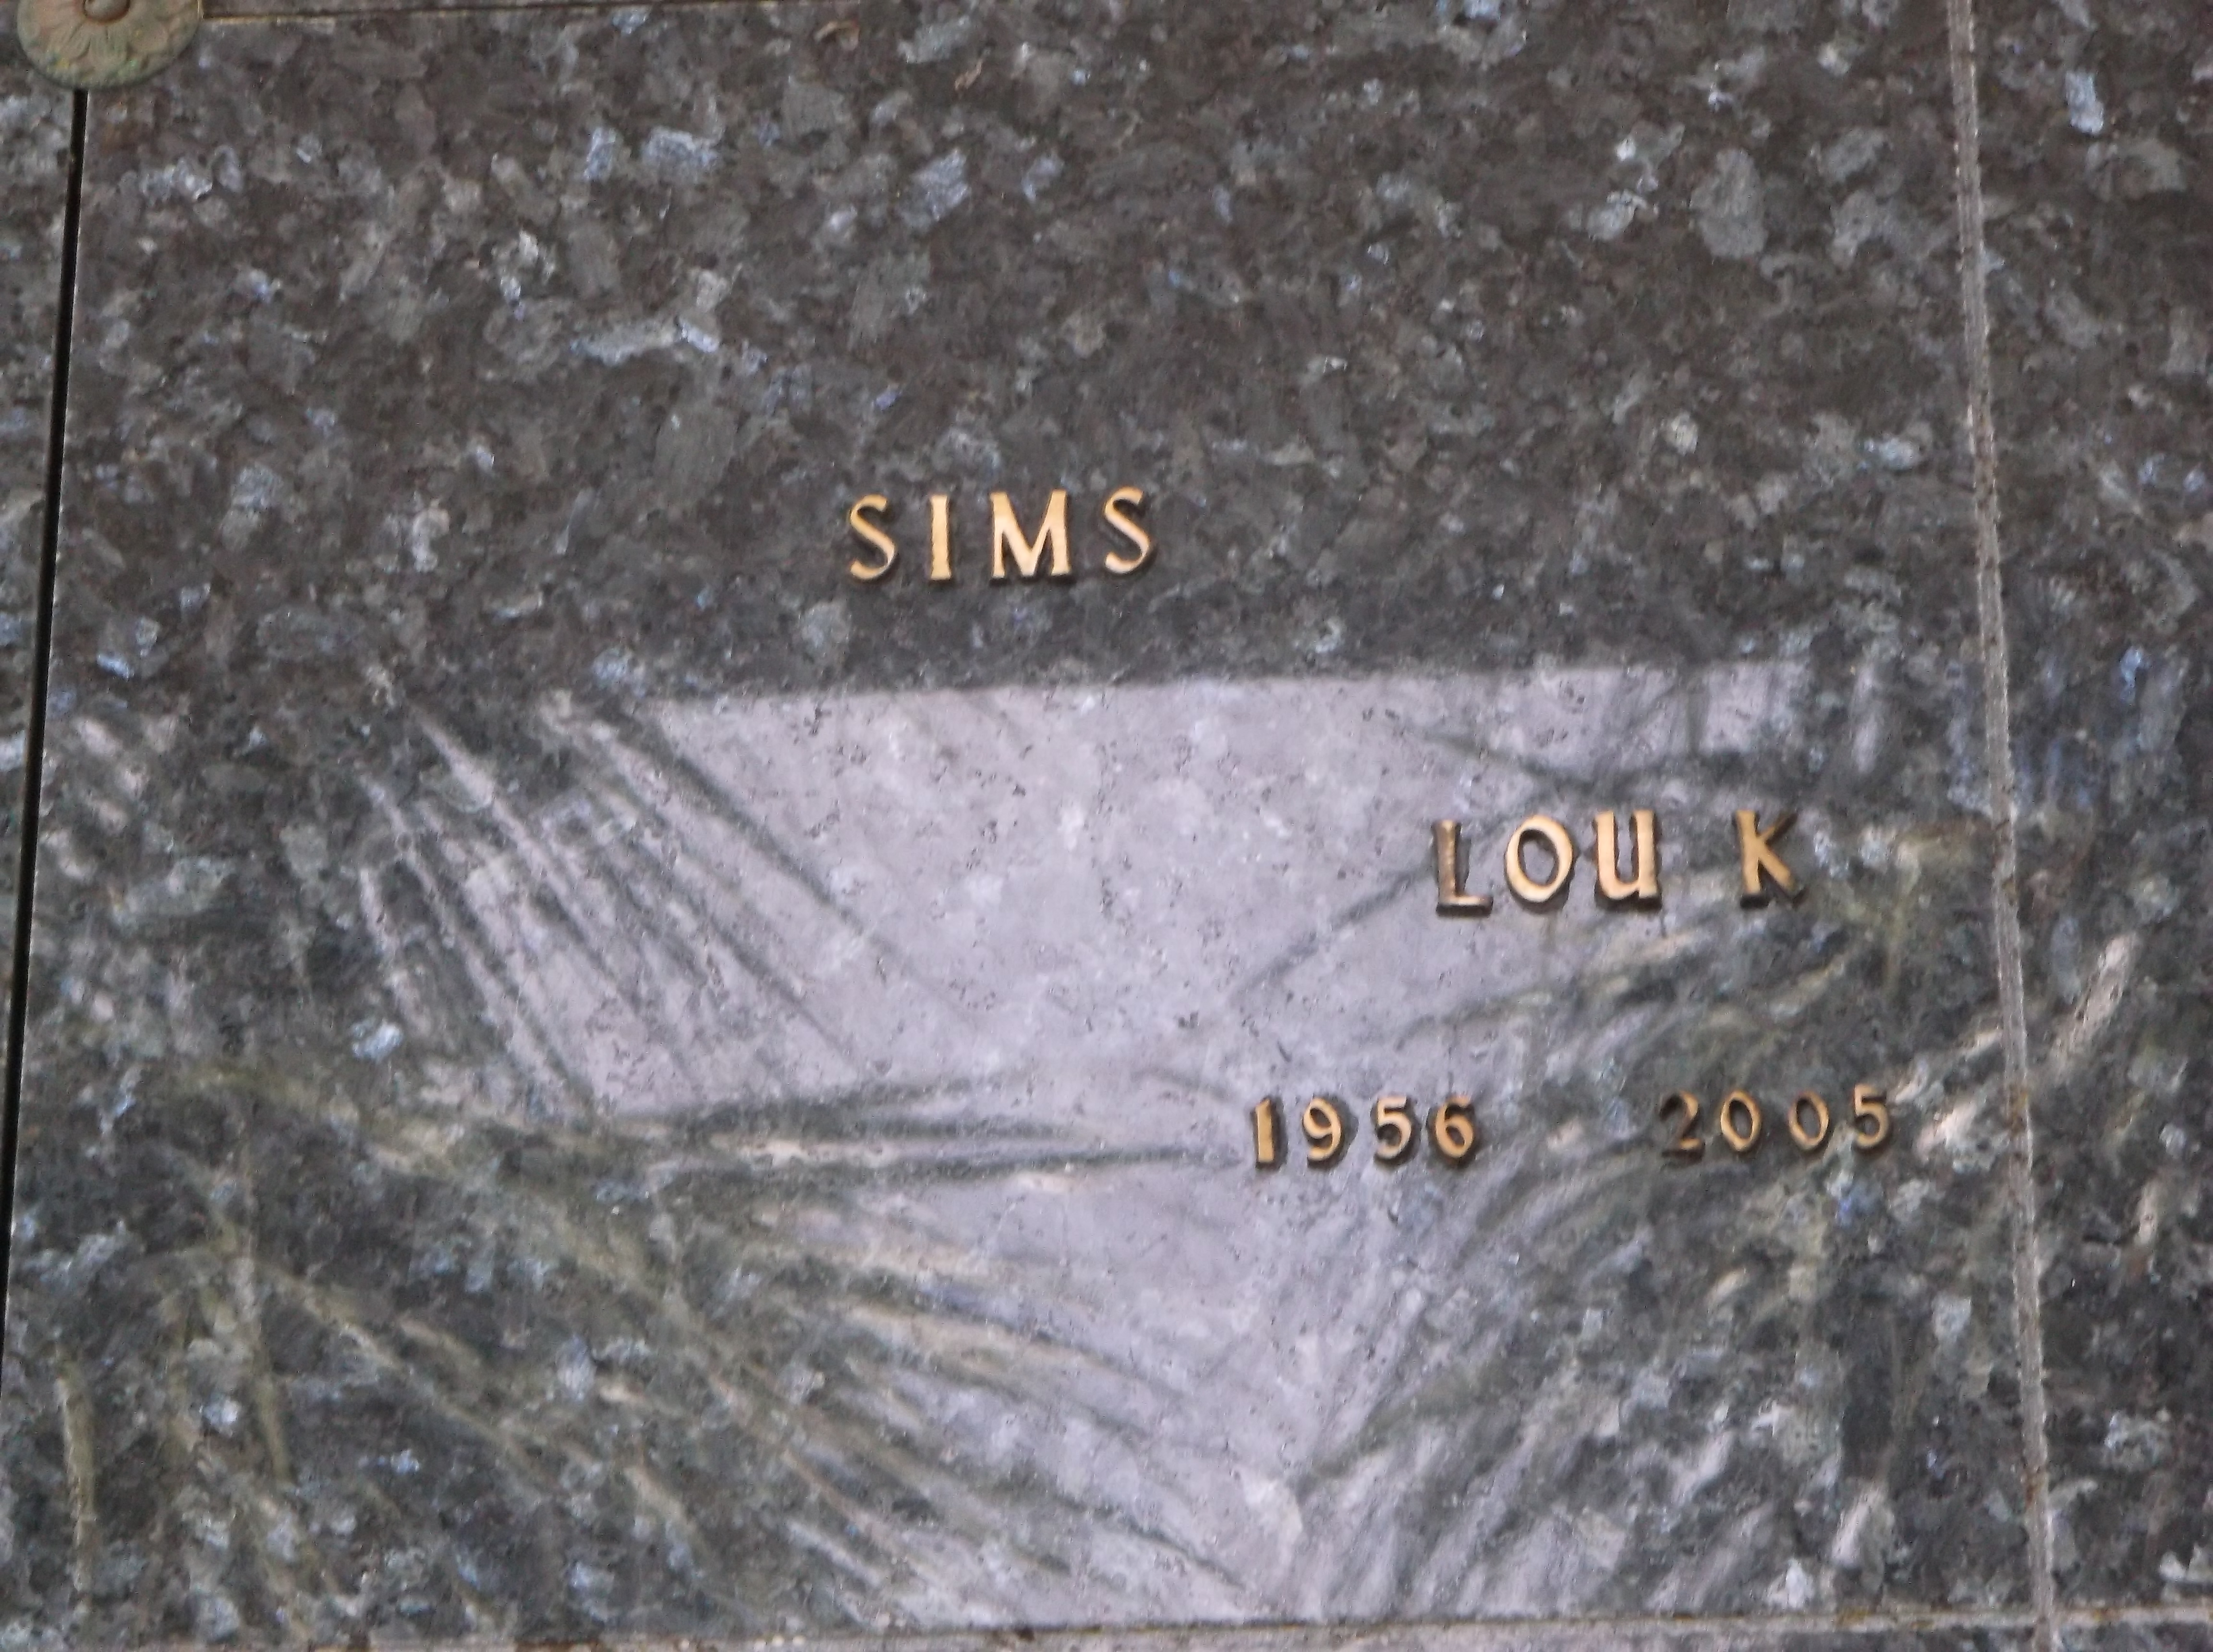 Lou K Sims